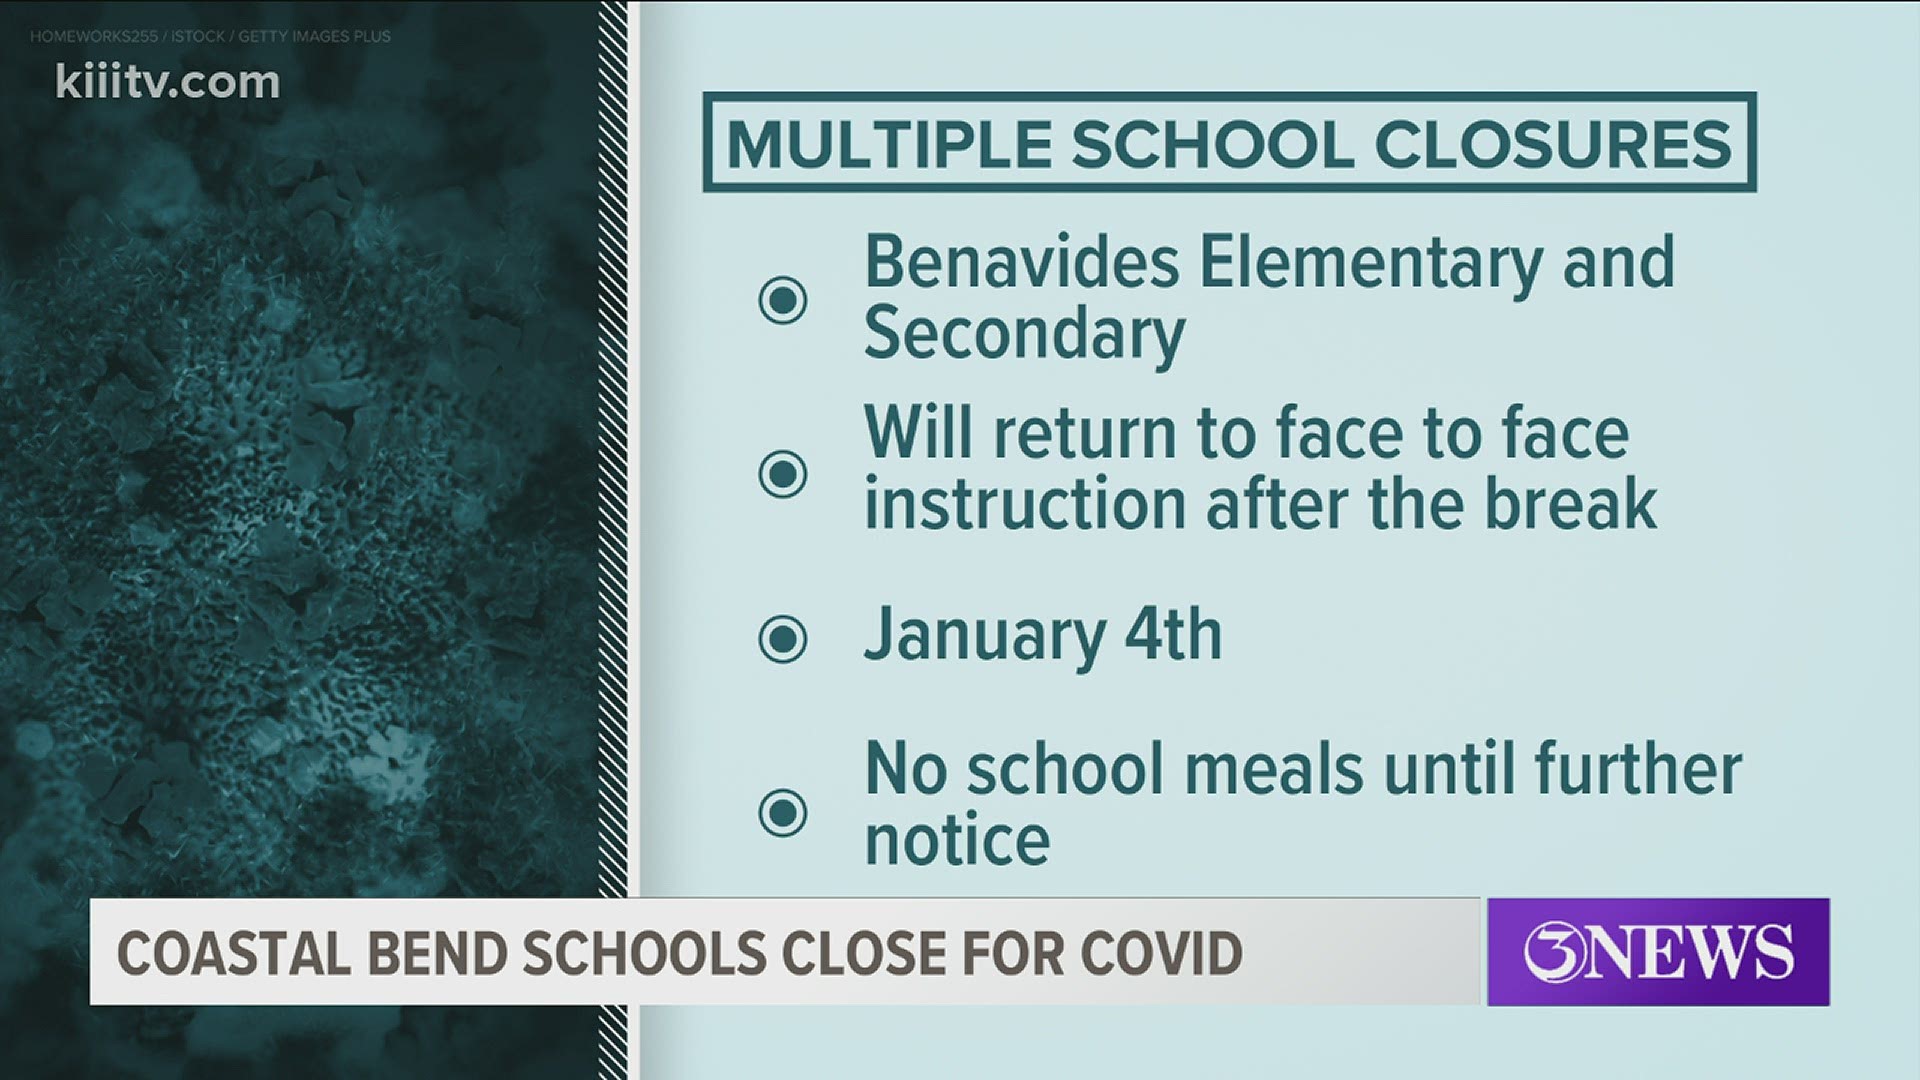 The latest coronavirus updates from schools around the Coastal Bend.